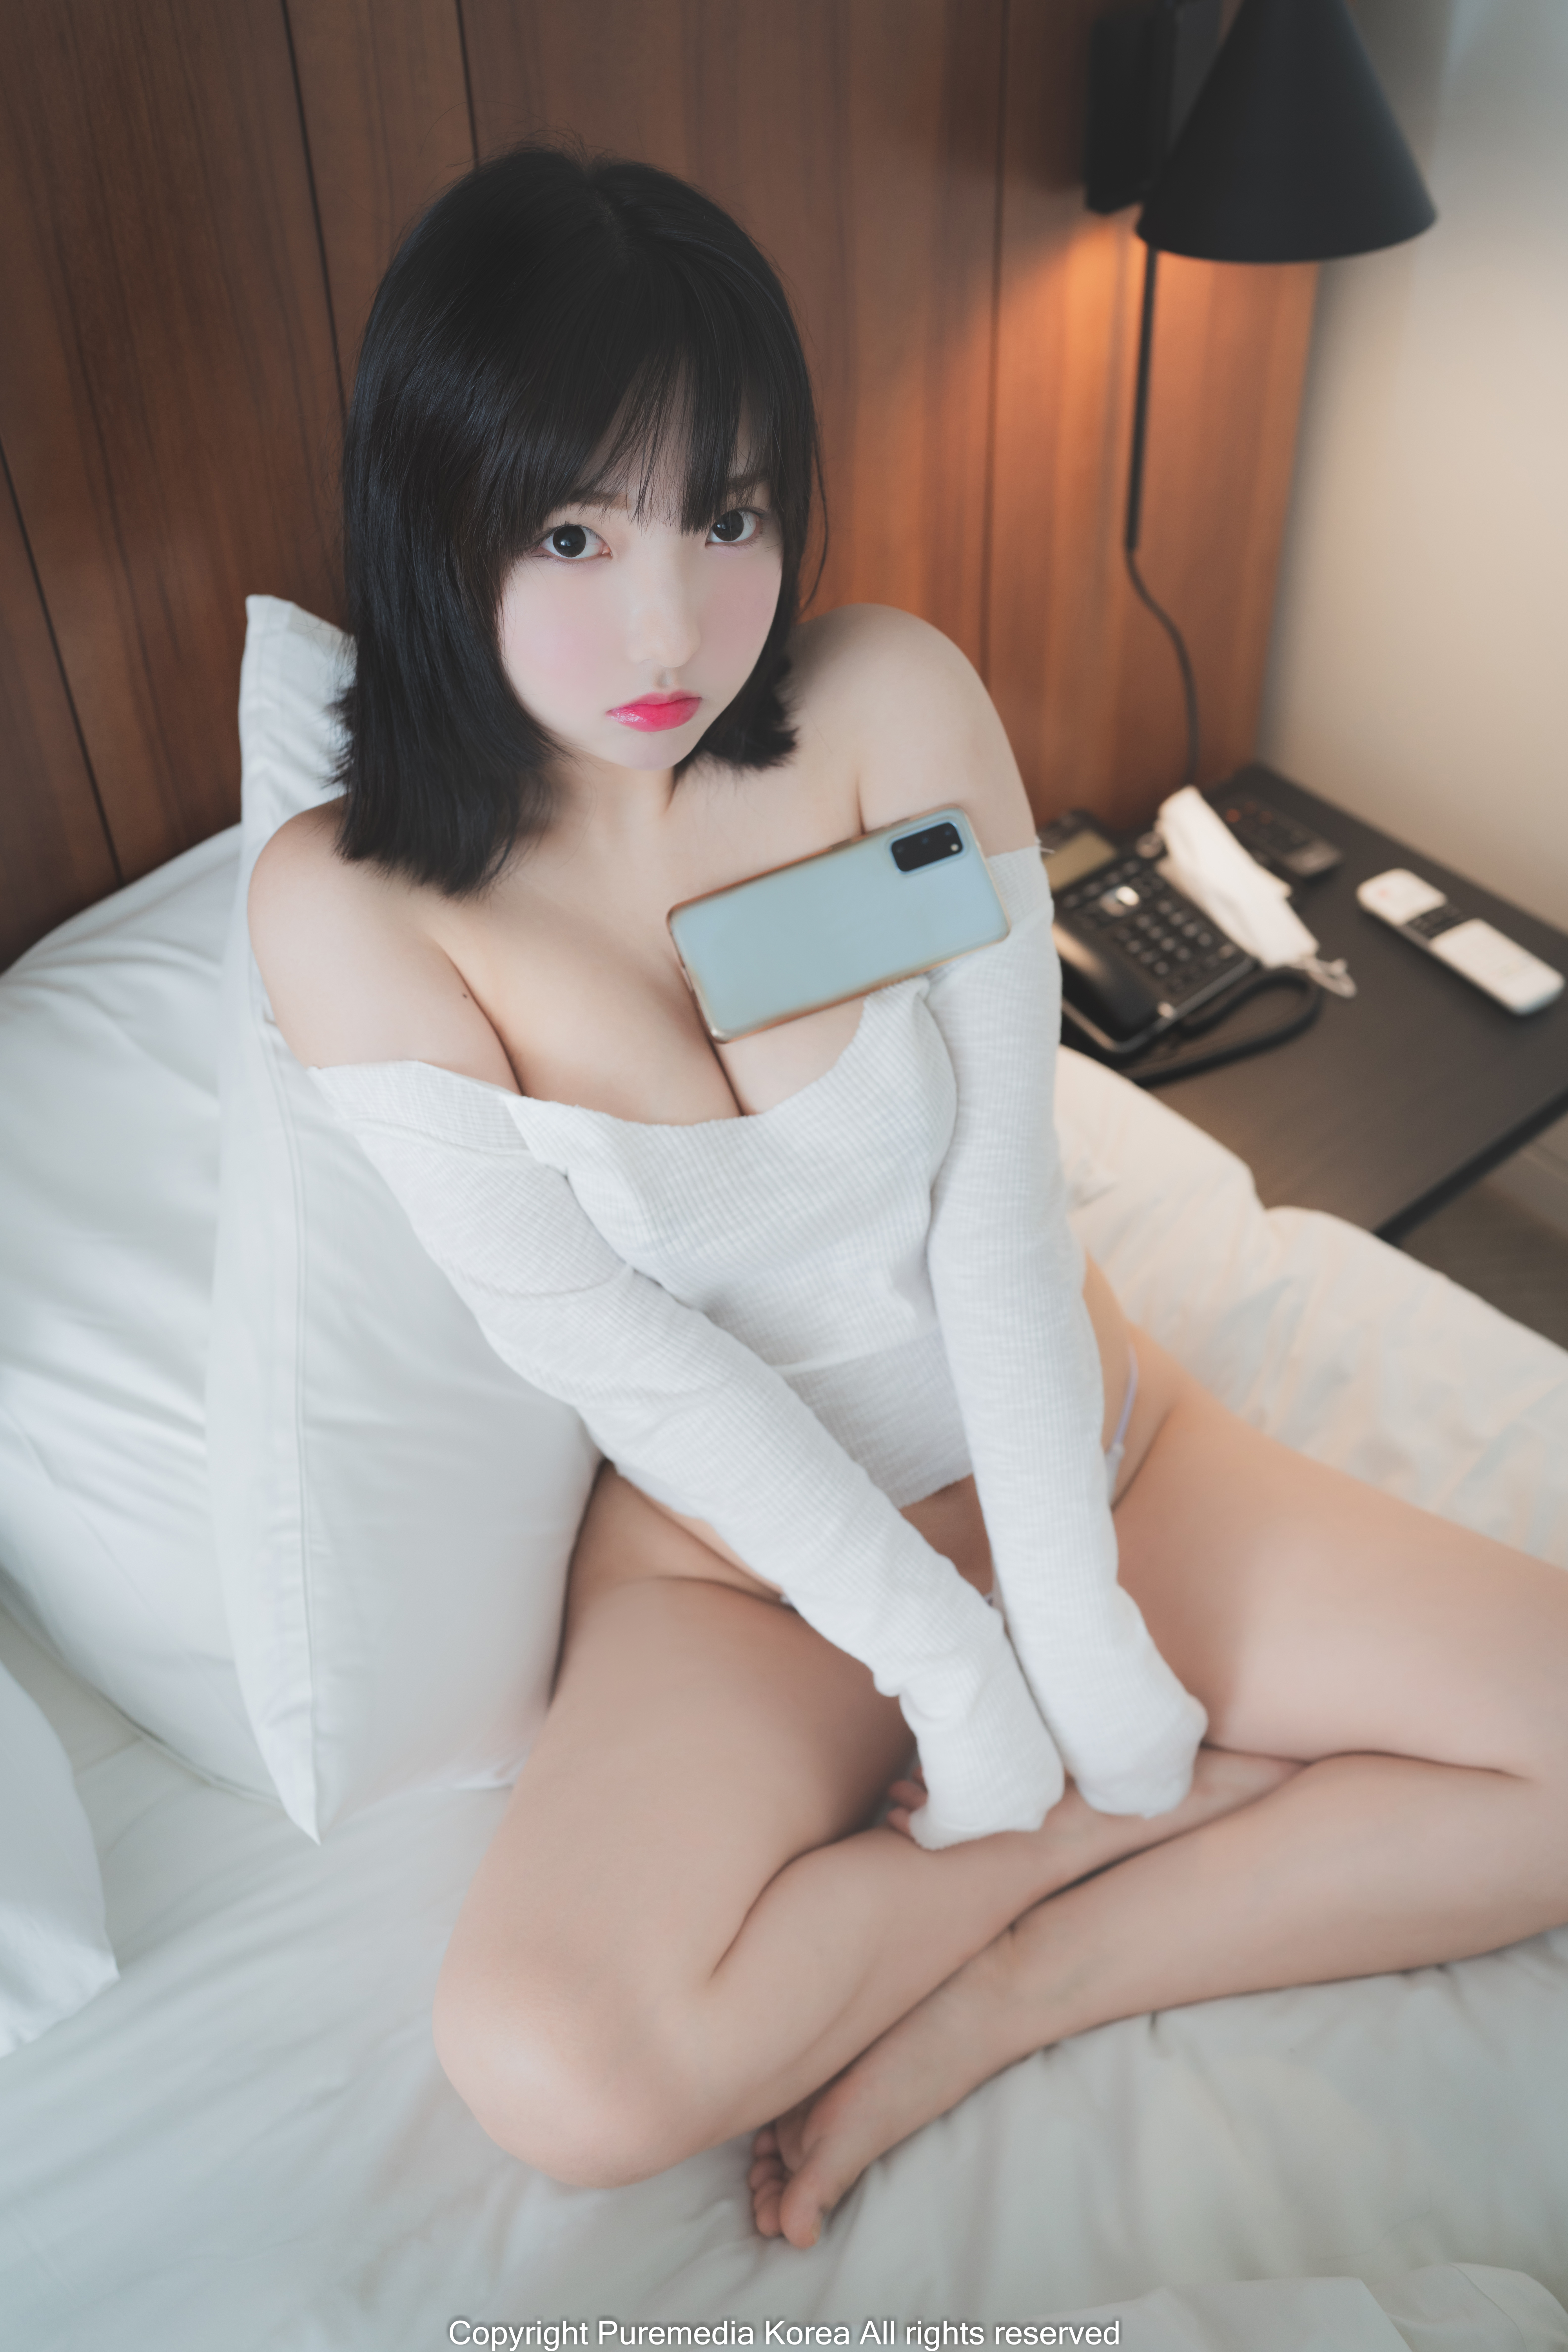 People 4000x6000 Han Som Pure Media women model brunette Asian Korean women white tops bare shoulders cleavage no bra in bed women indoors barefoot smartphone